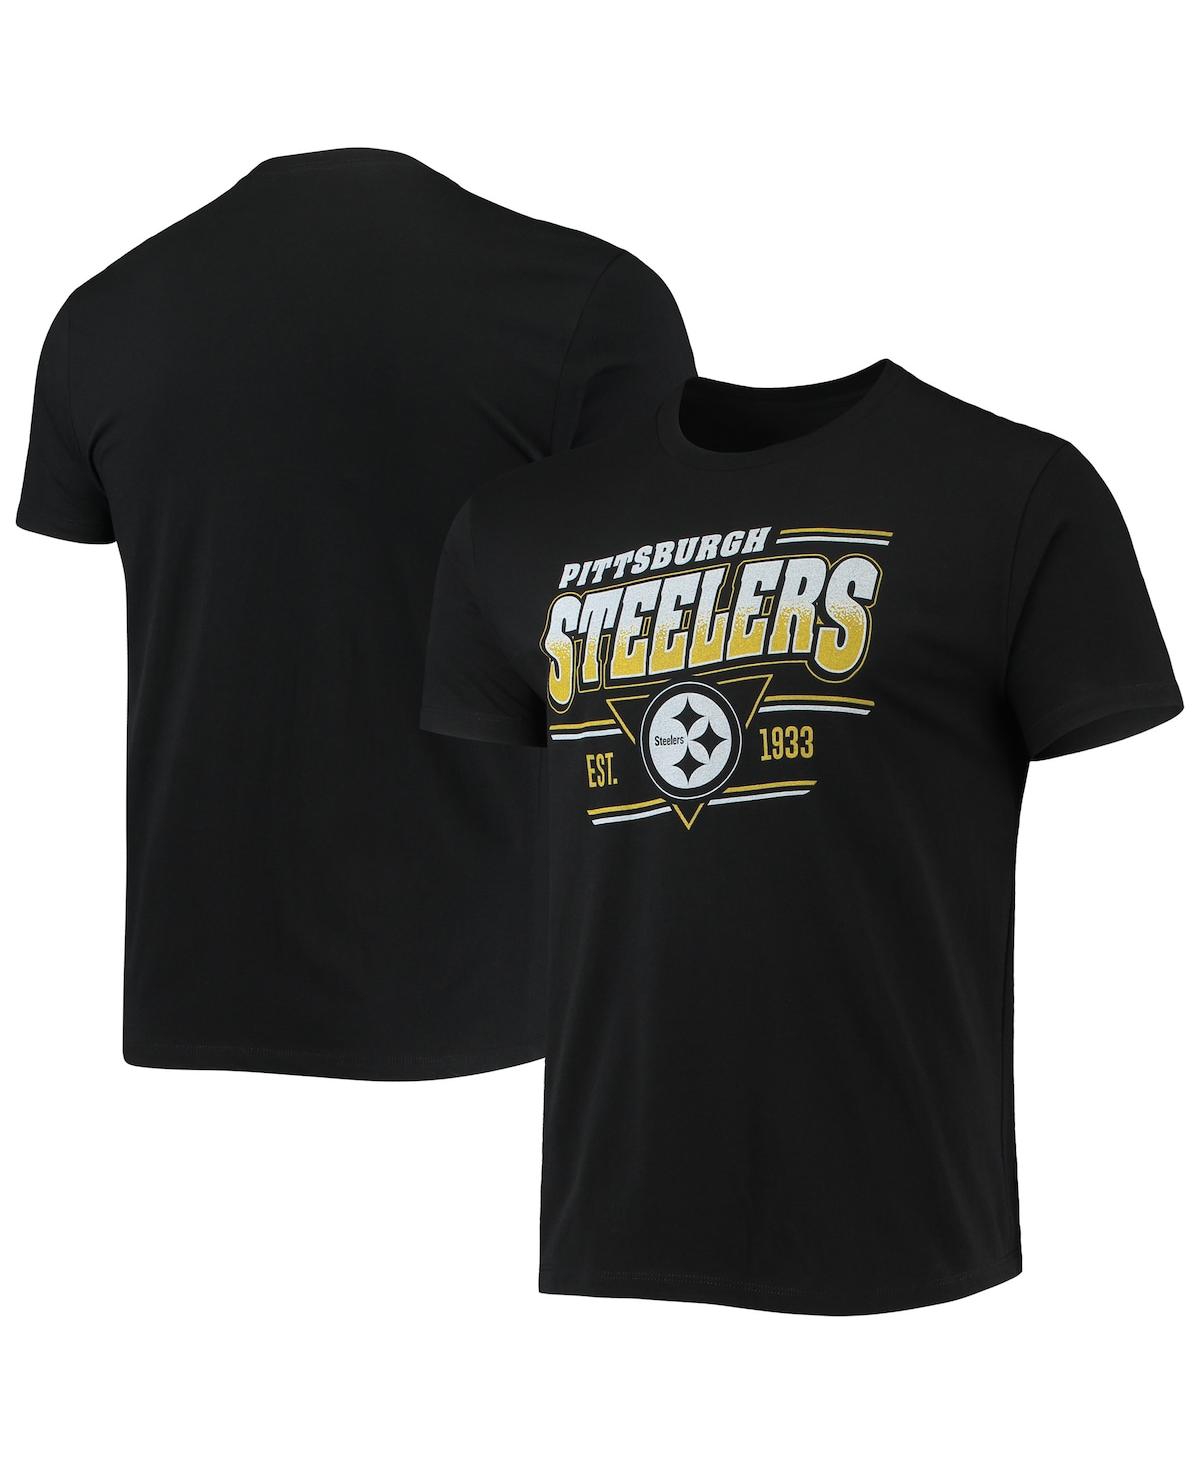 Men's Black Pittsburgh Steelers Throwback T-shirt - Black